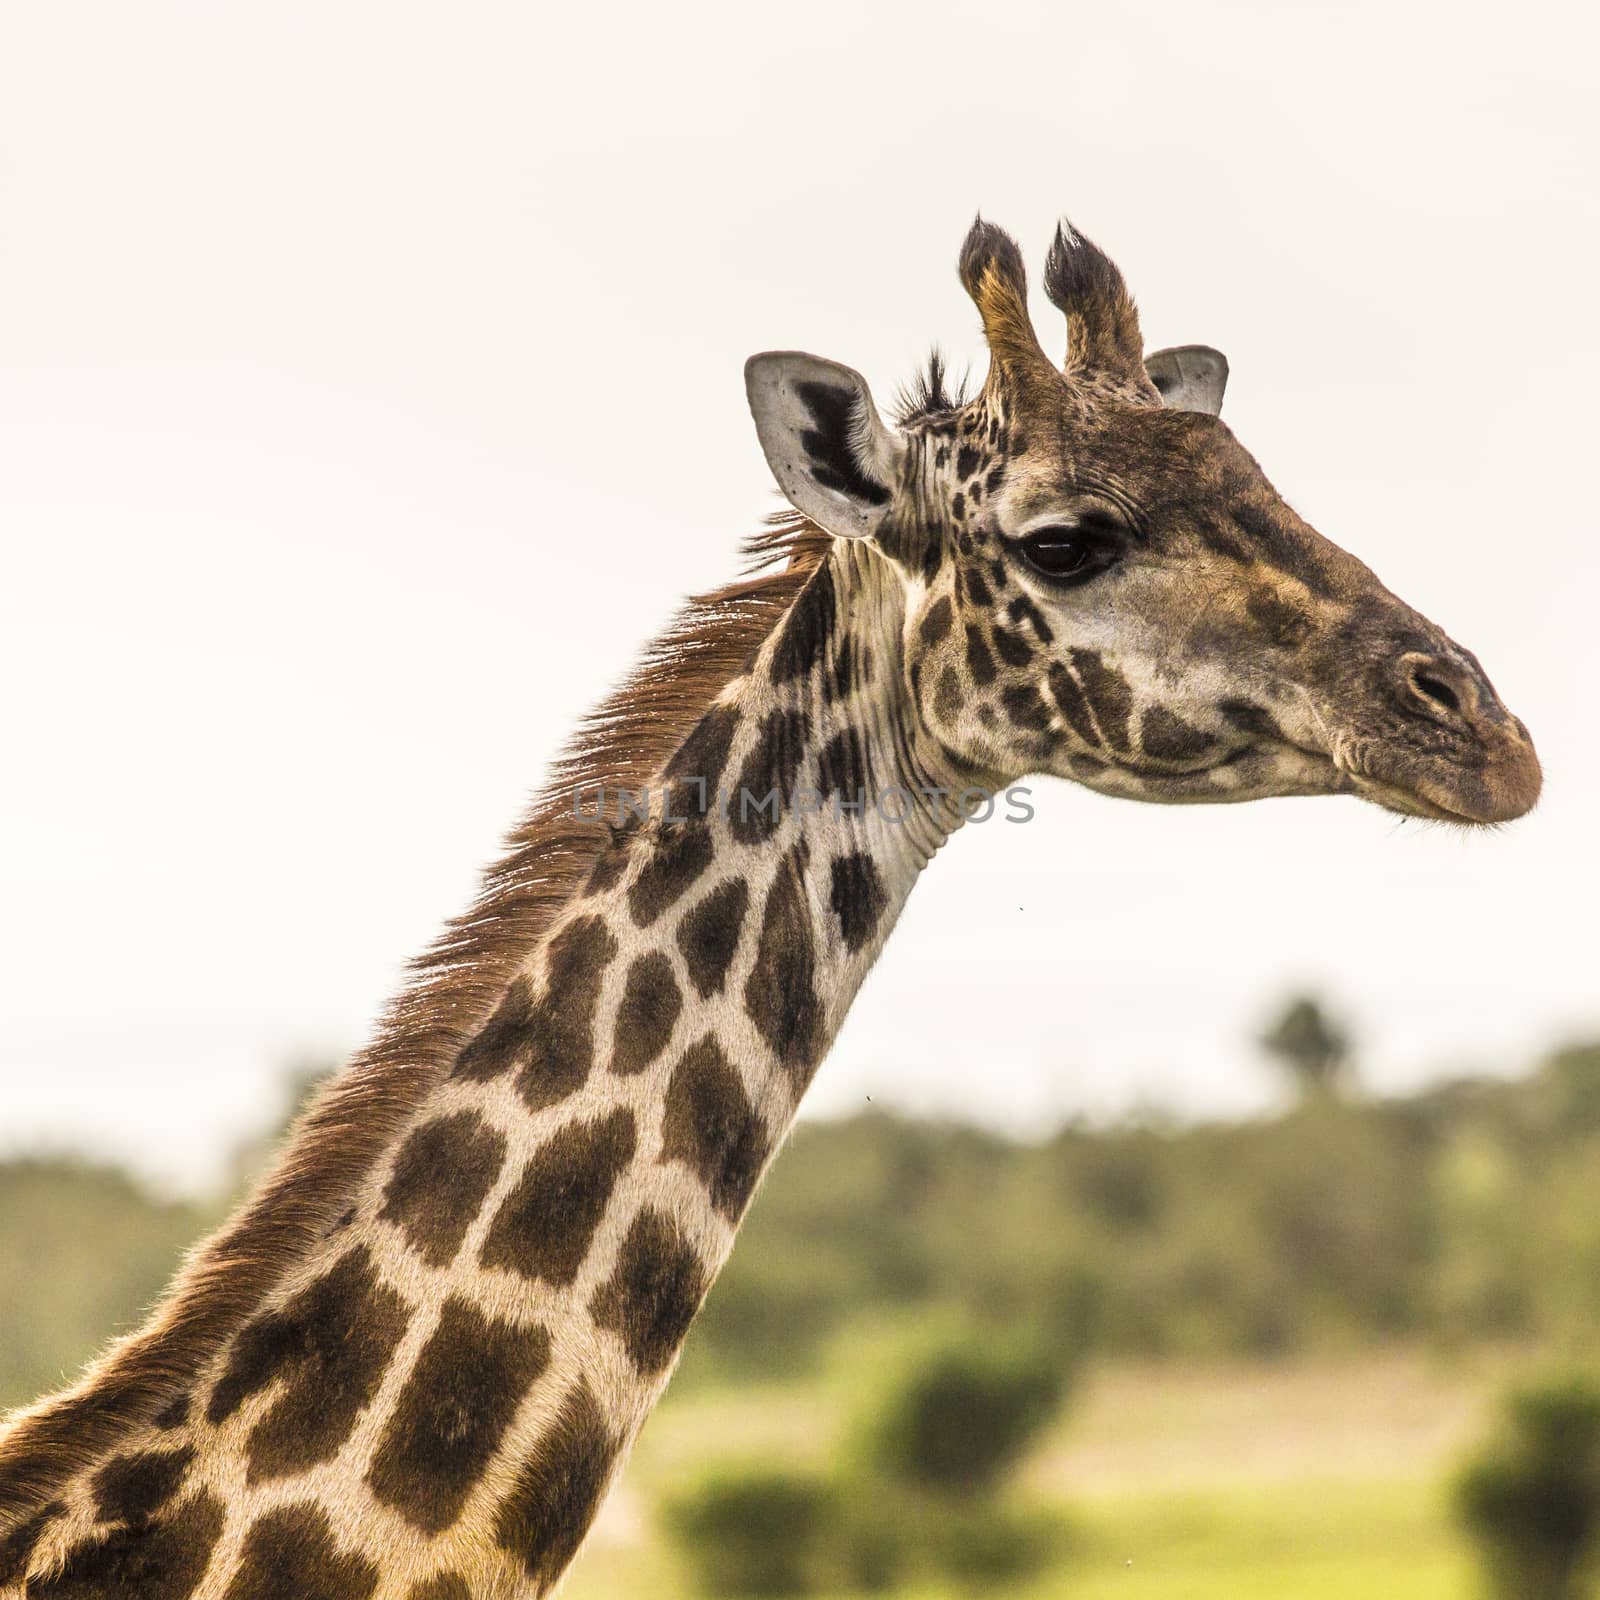 Giraffe on safari wild drive, Kenia. by mariusz_prusaczyk